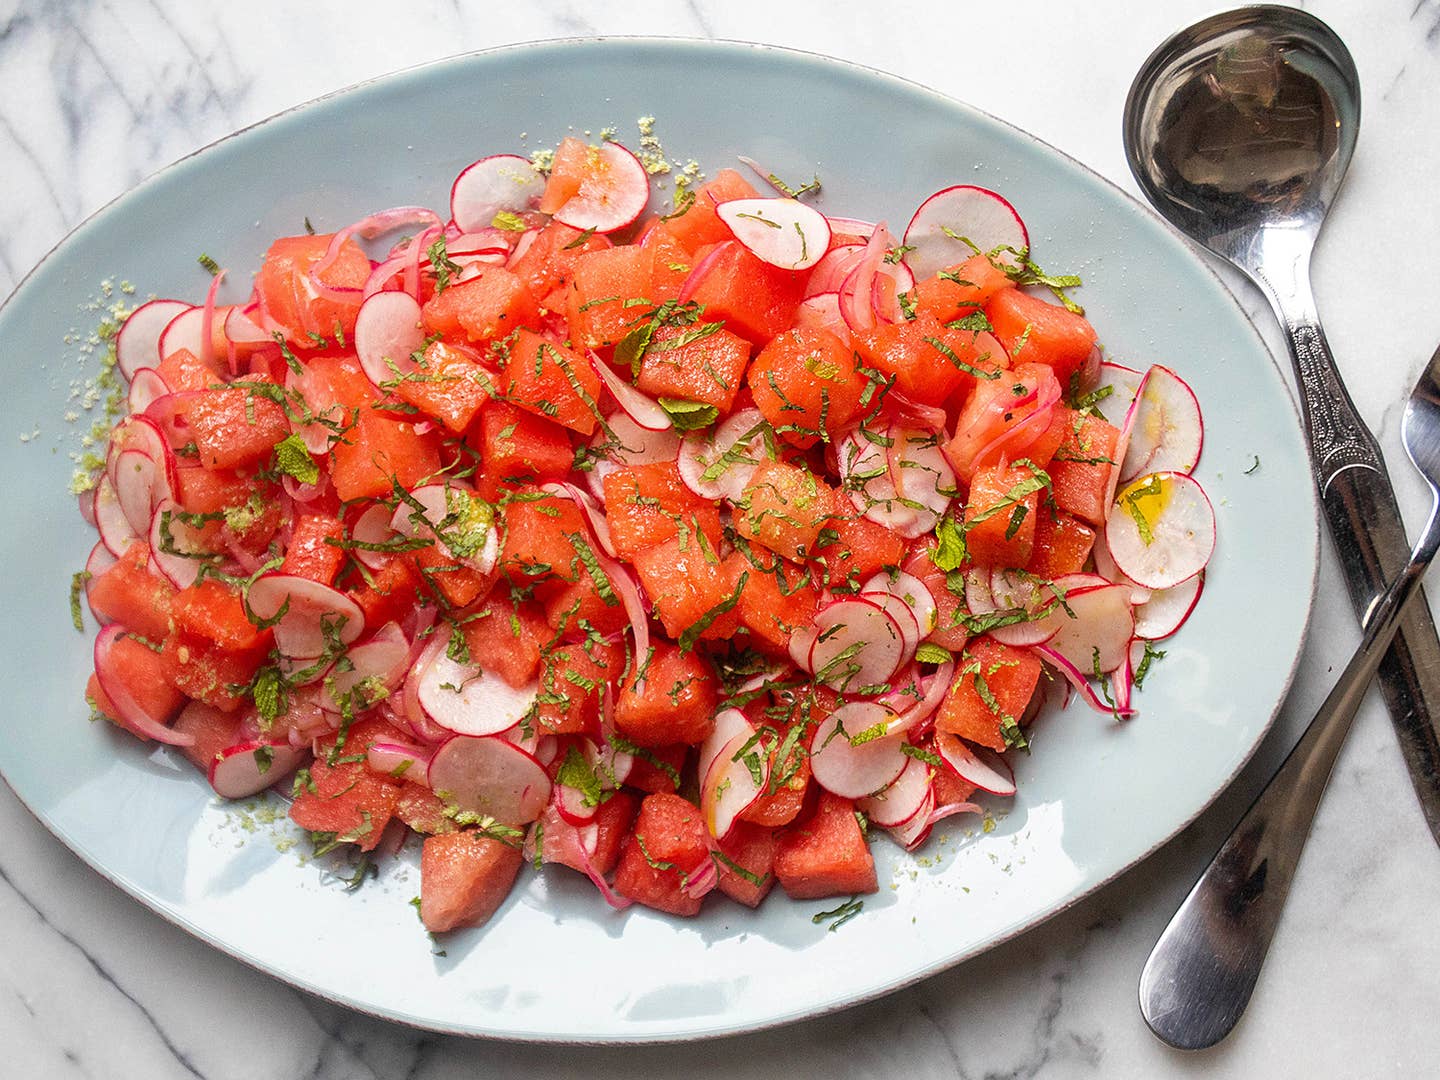 Watermelon Recipes That Celebrate Summer’s Juiciest Fruit